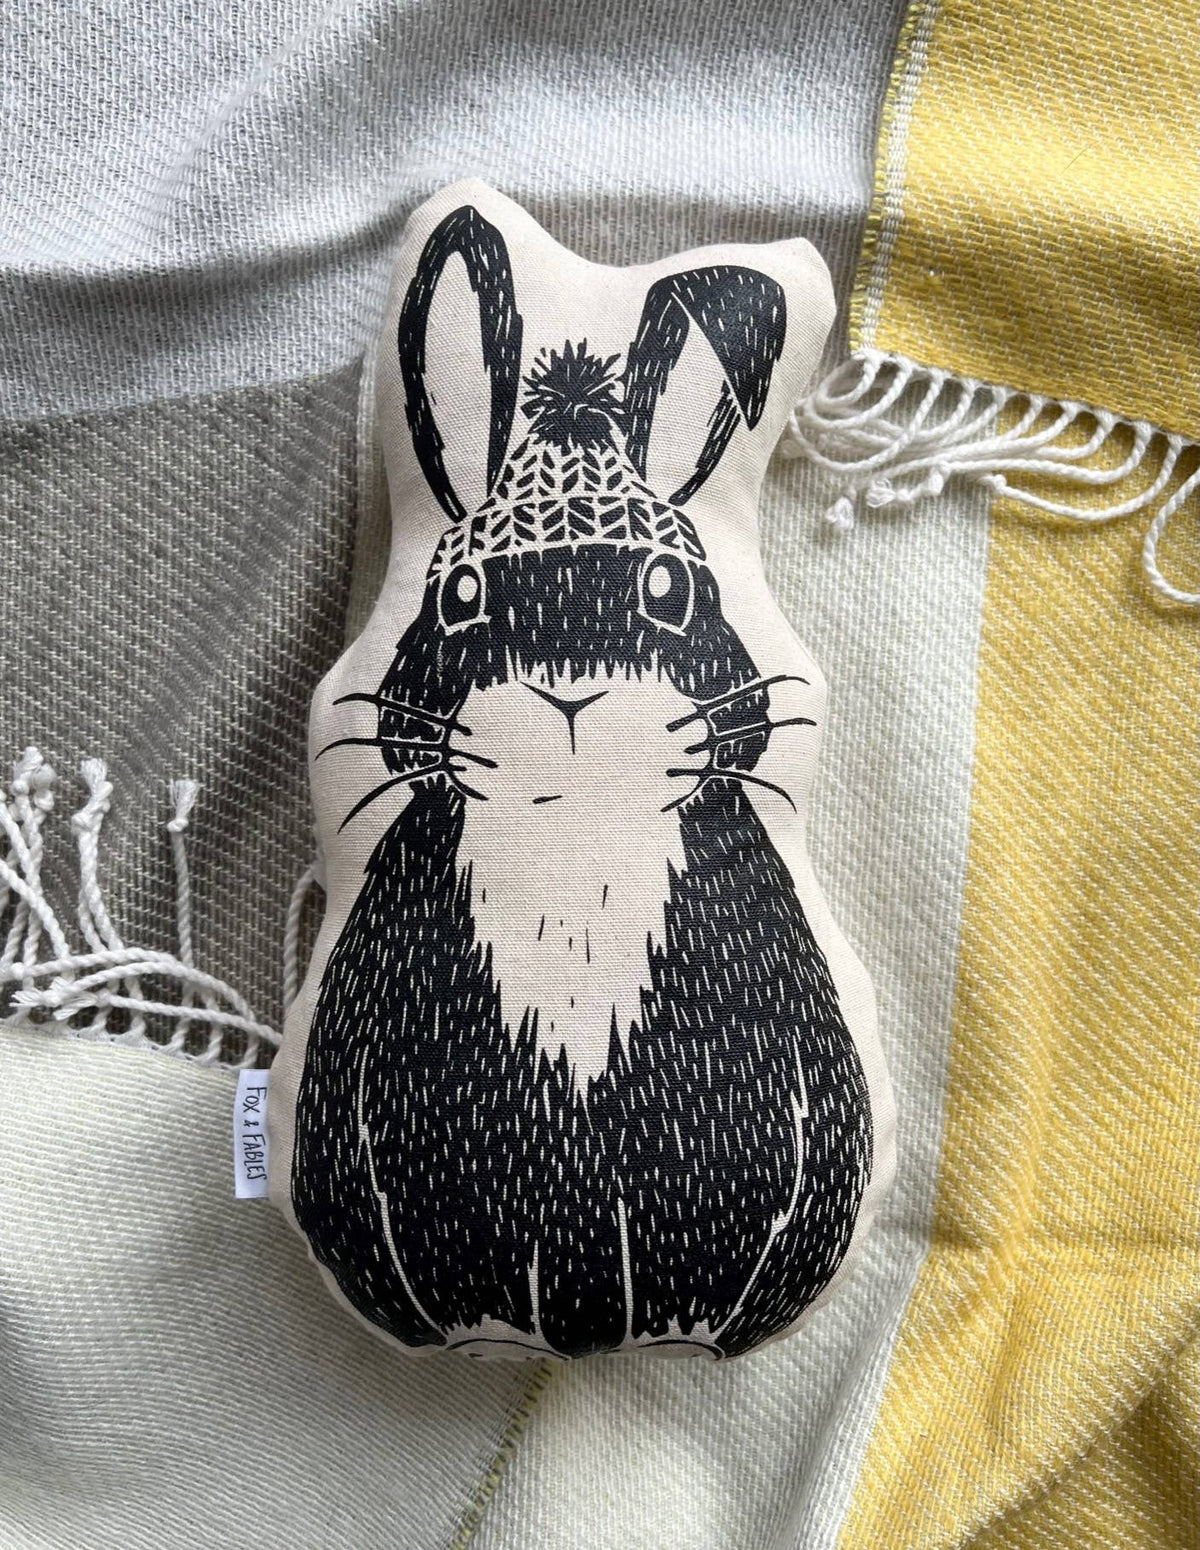 Printed Pillows - Woodland Animals: Rabbit